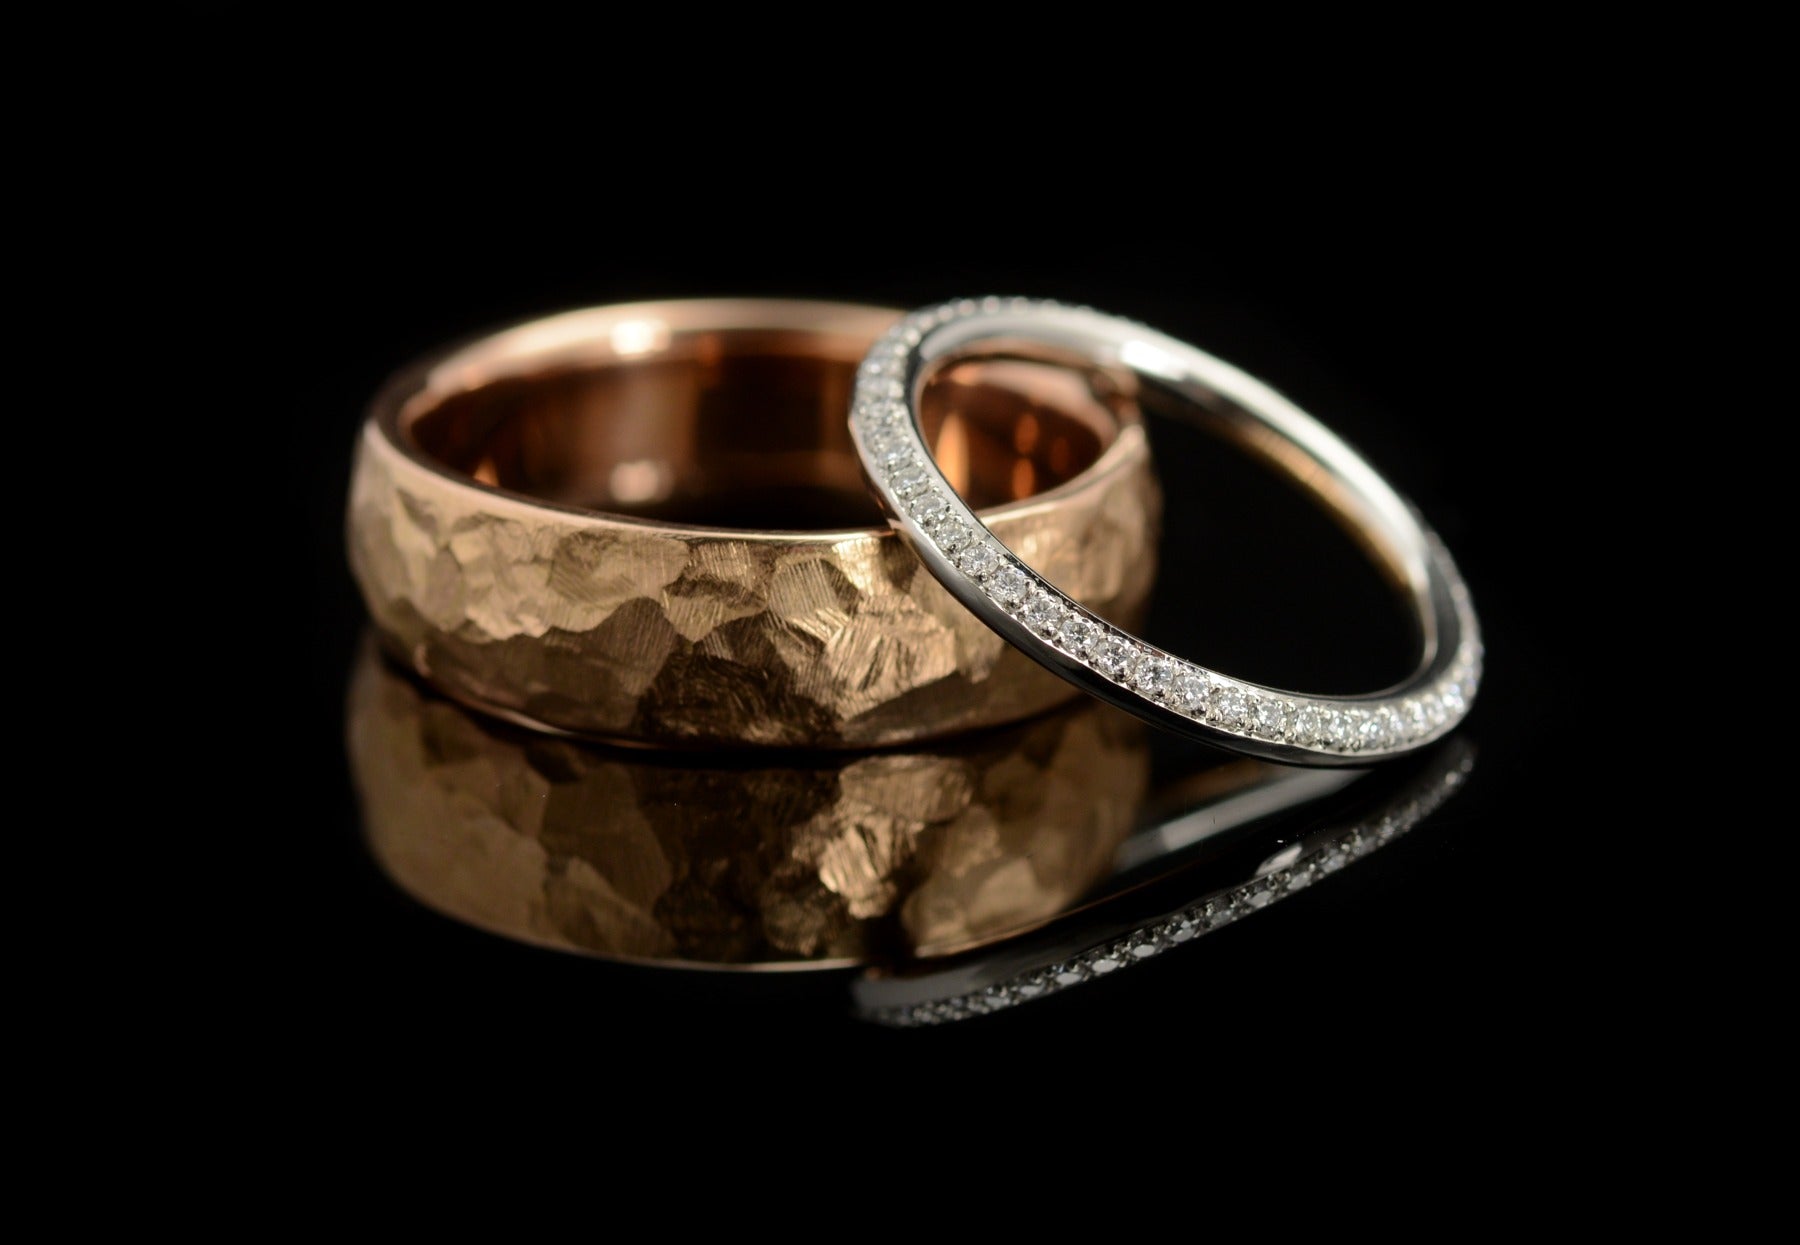 White diamond and platinum ladies wedding ring and hammered rose gold mens wedding ring